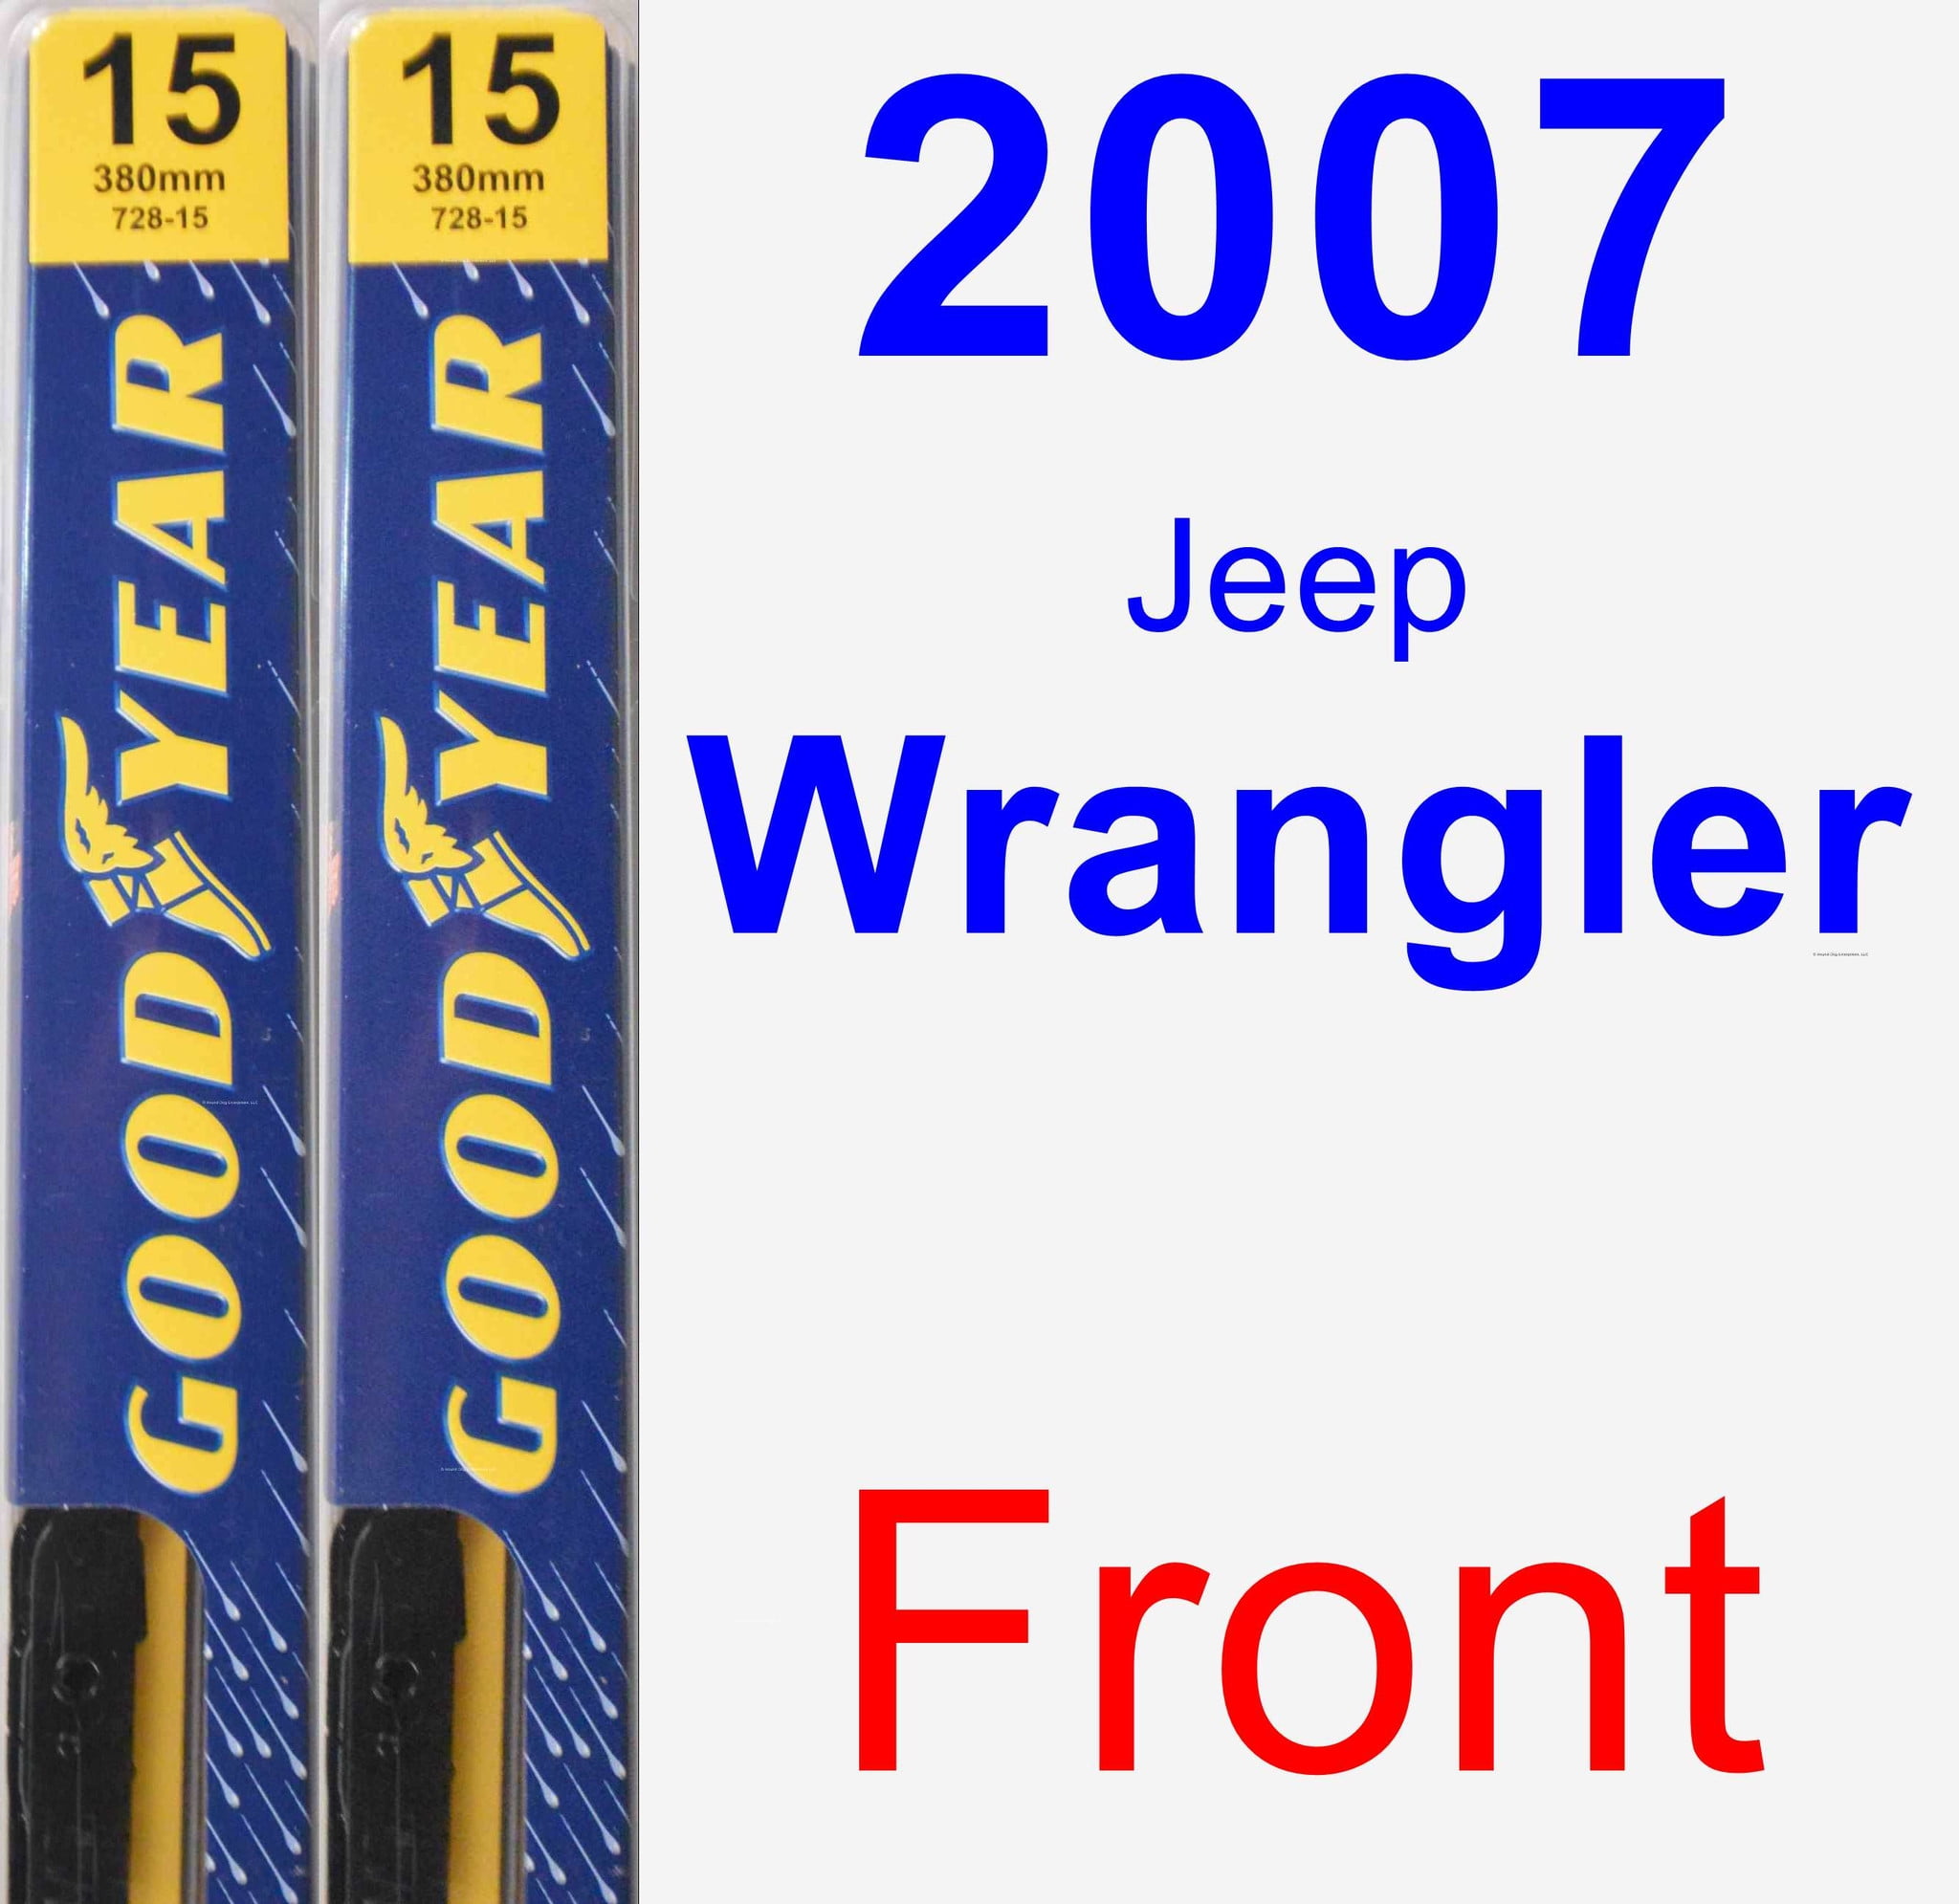 2007 Jeep Wrangler Passenger Wiper Blade - Premium 